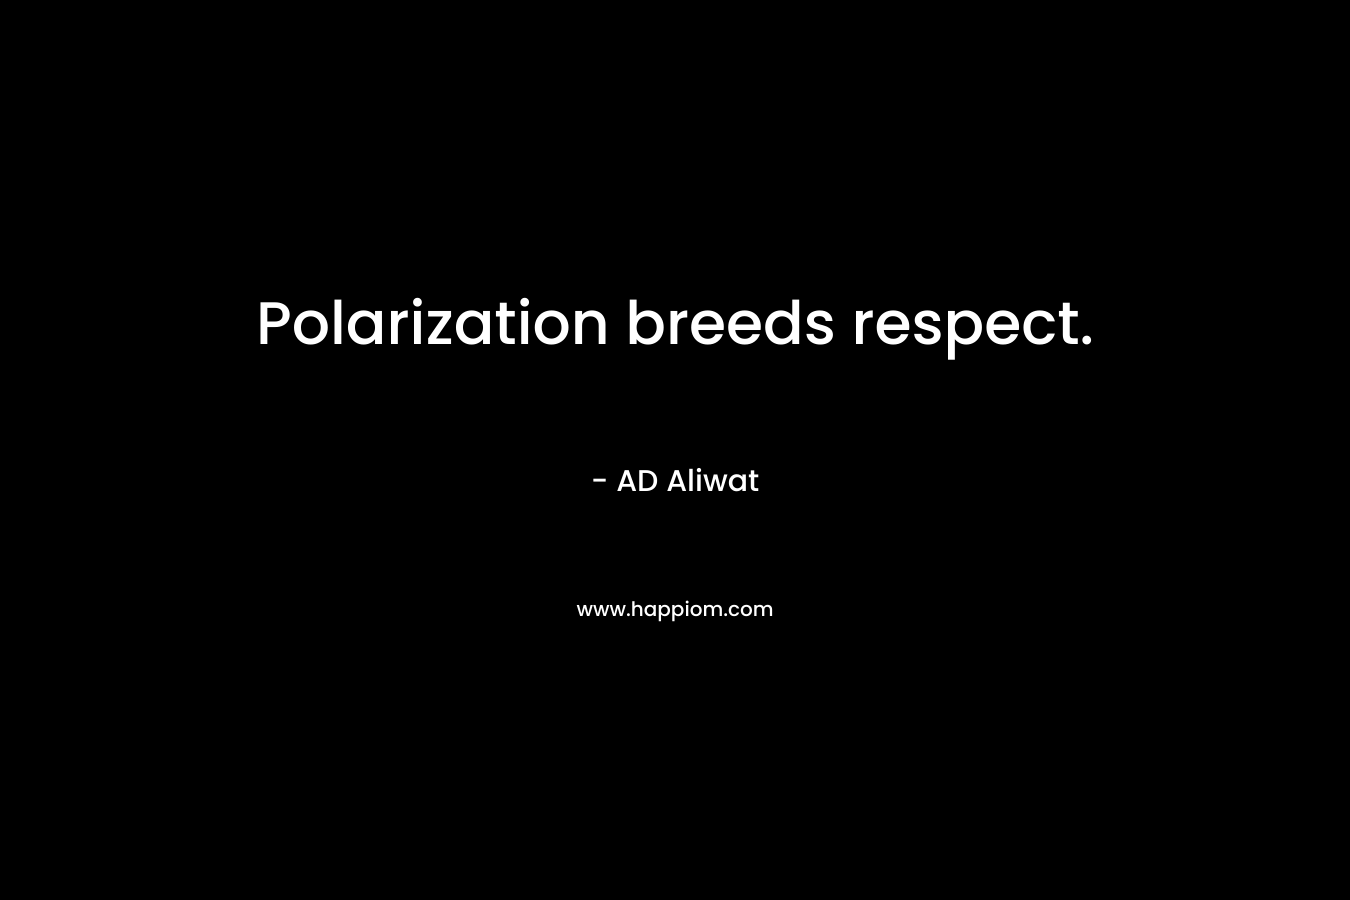 Polarization breeds respect.